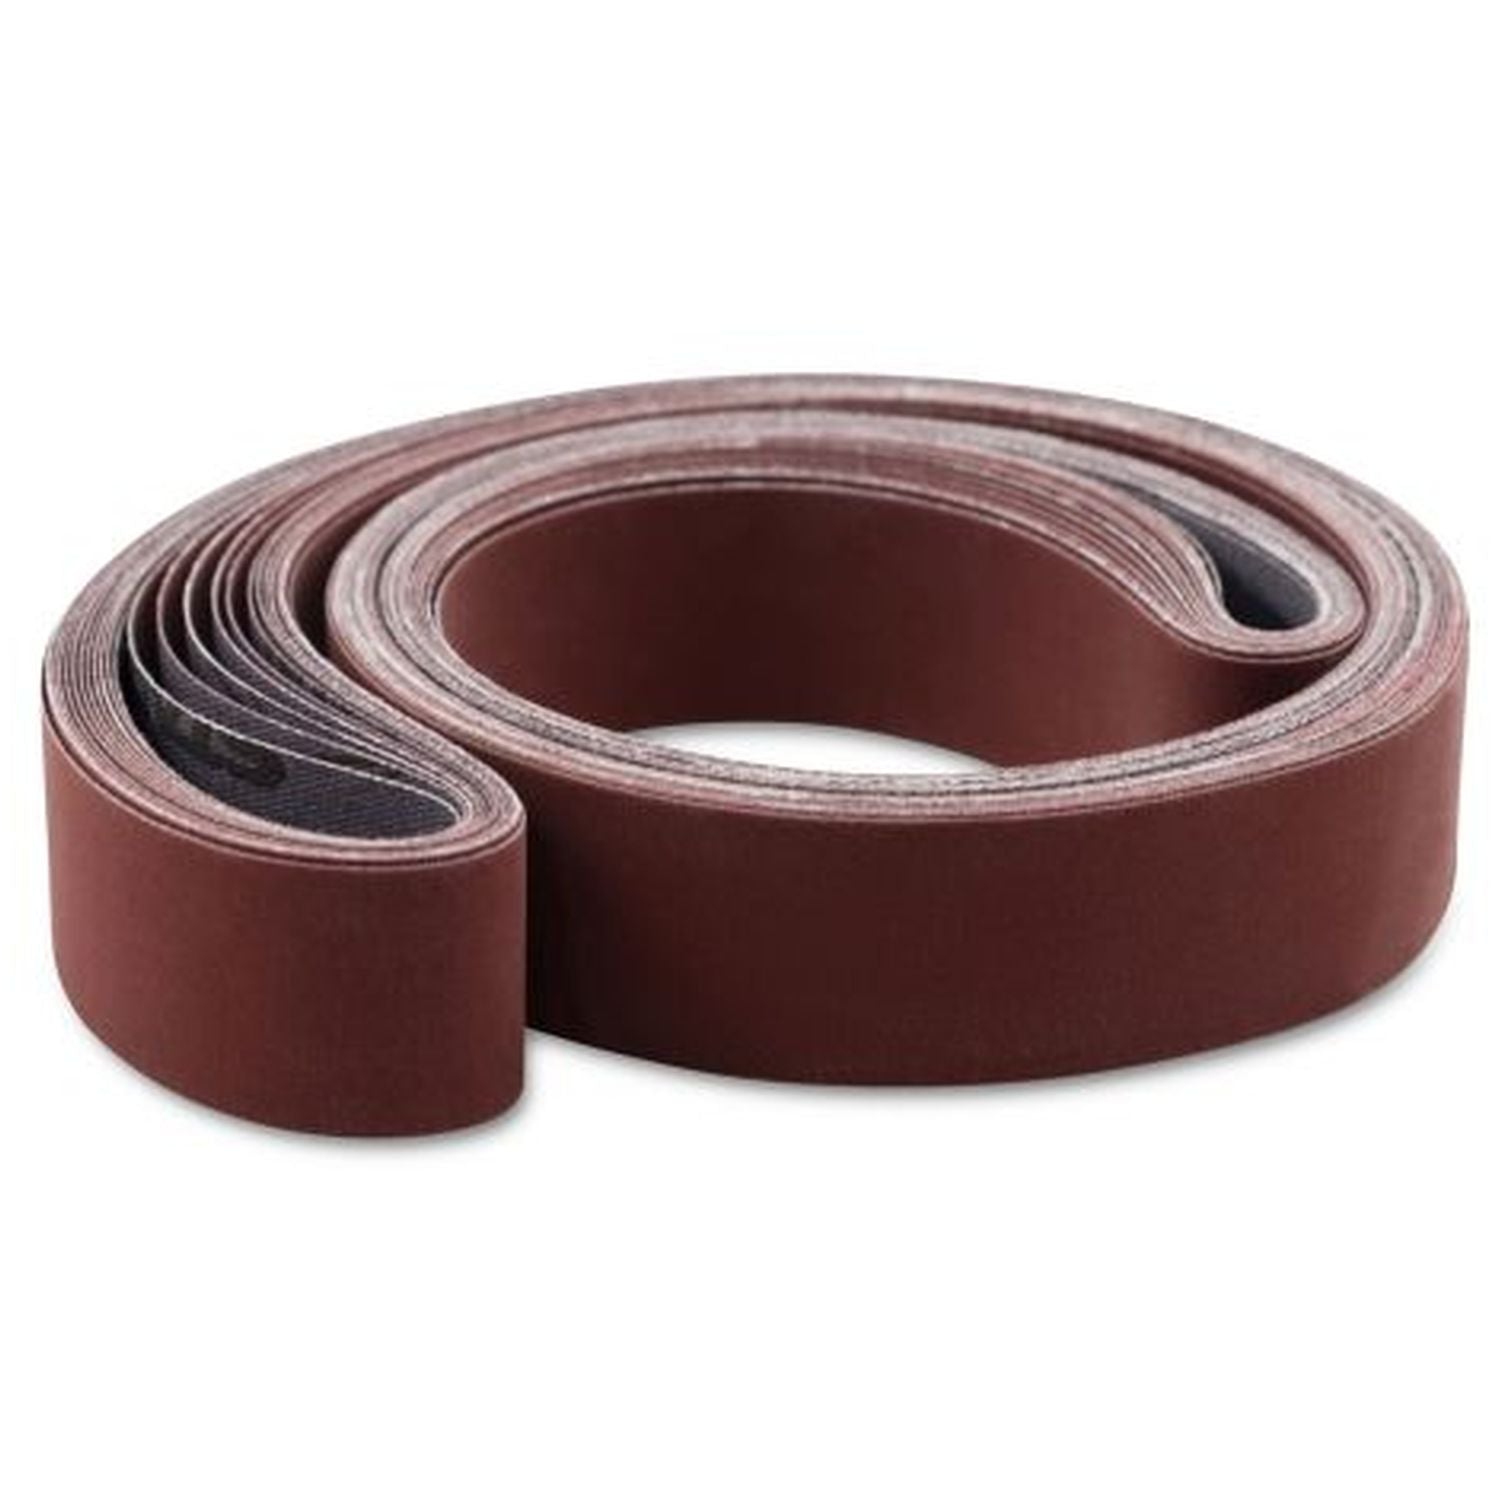 3 X 132 Inch Flexible Wood and Non-Ferrous Aluminum Oxide Sanding Belts, 6 Pack - Red Label Abrasives